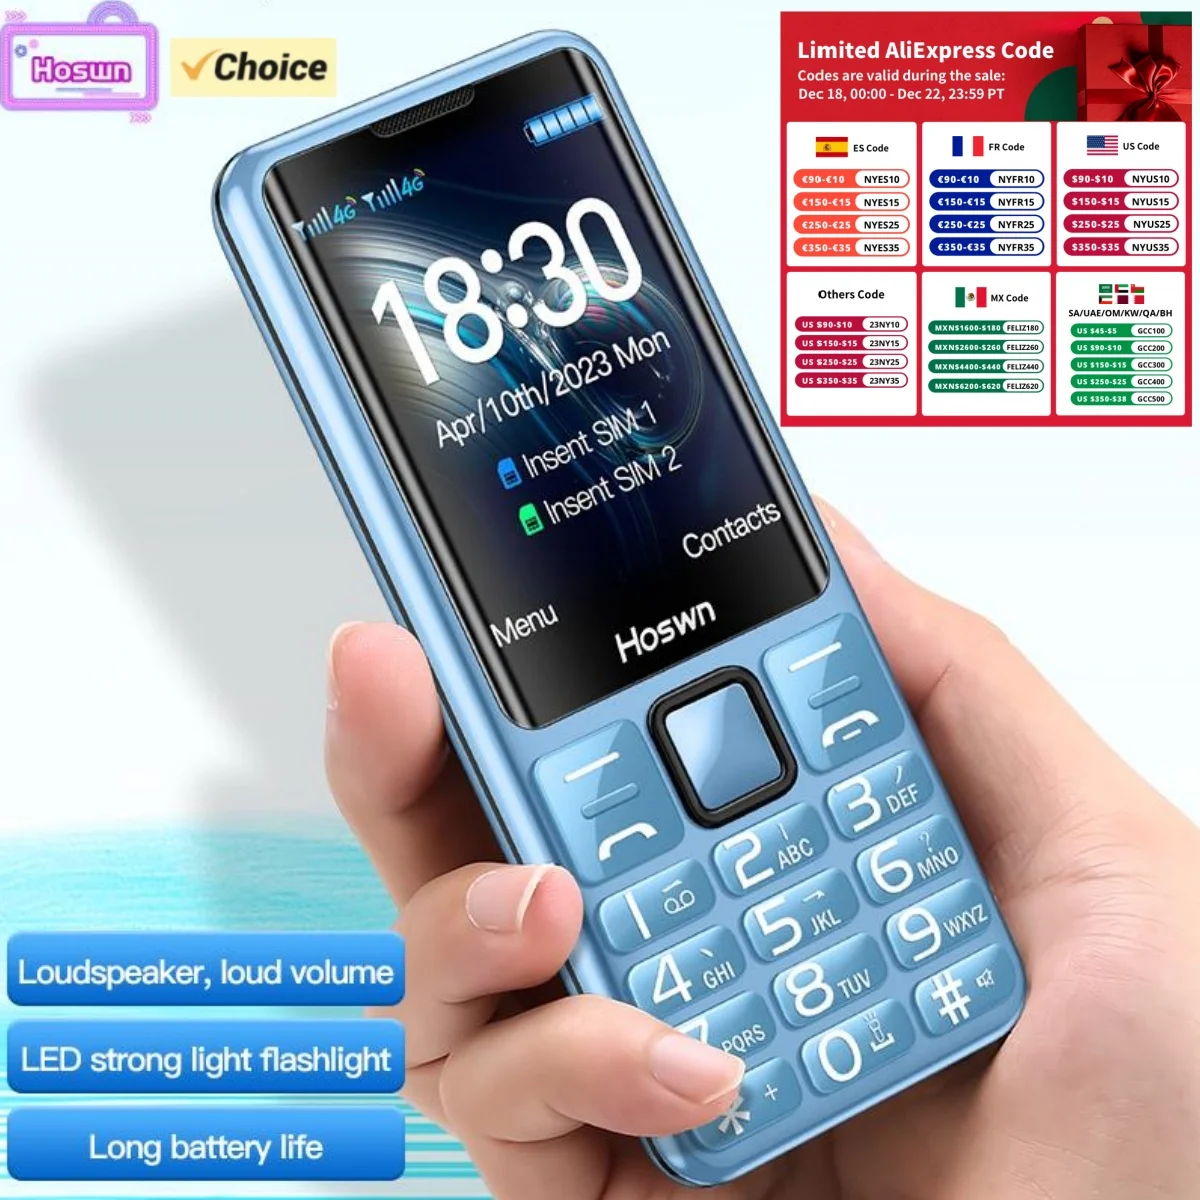 Mini i79 (H6) Elderly 2G Cellphone 2.4Inches TFT Screen 32MB RAM Torch Dual SIM English keyboard Mobile Phone